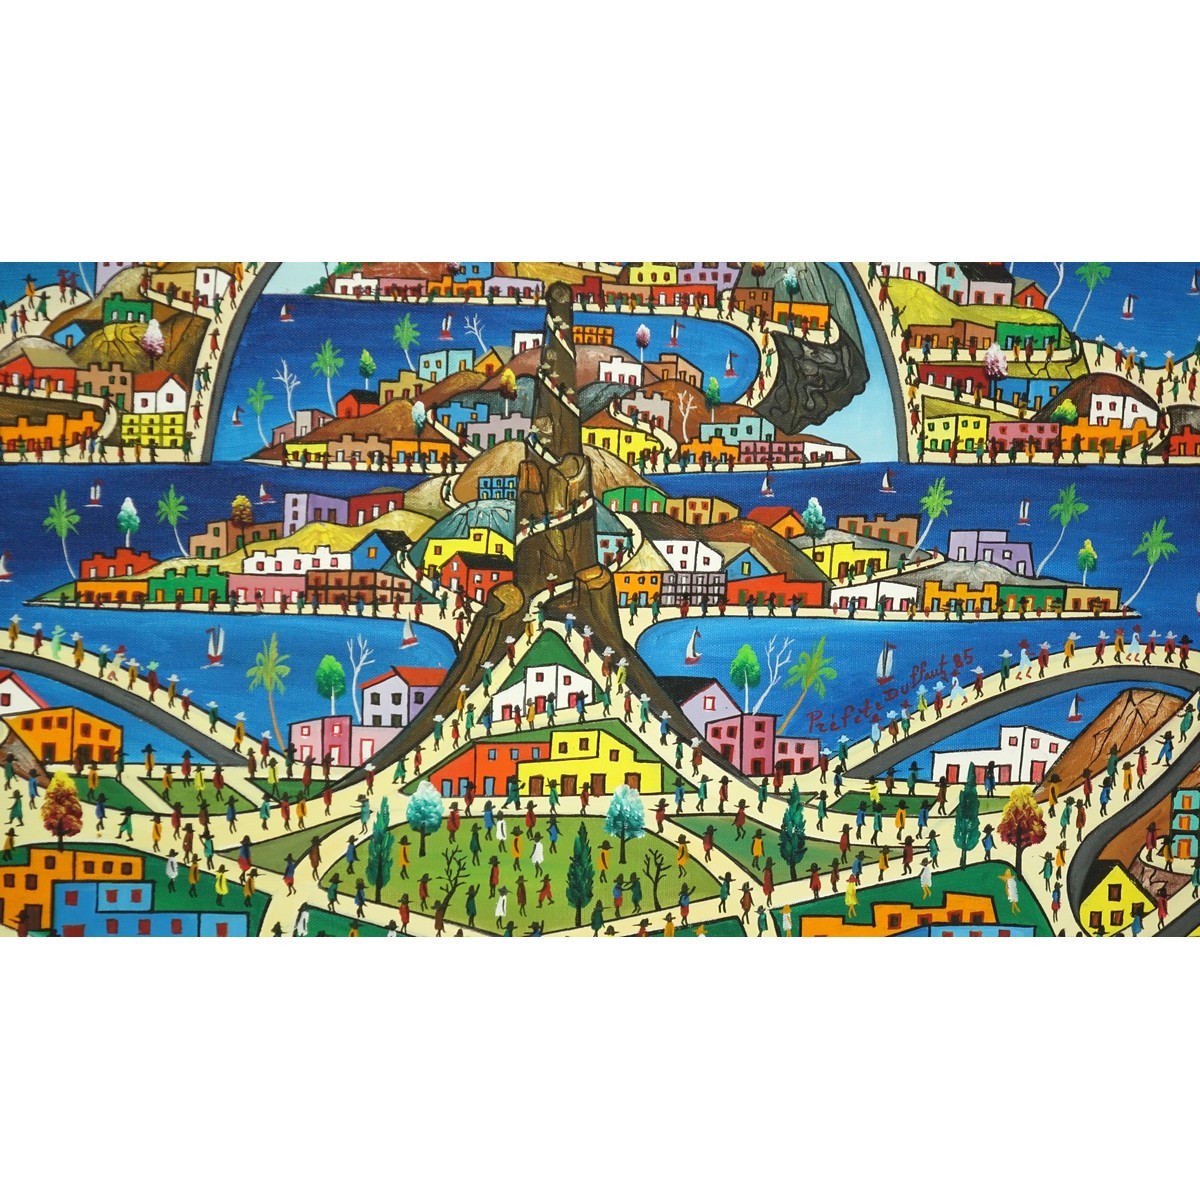 Prefete Duffaut, Haitian (1923 - 2012) Oil on Canvas, Fantasy Coastal City, Signed Center. Artist information attached en verso.